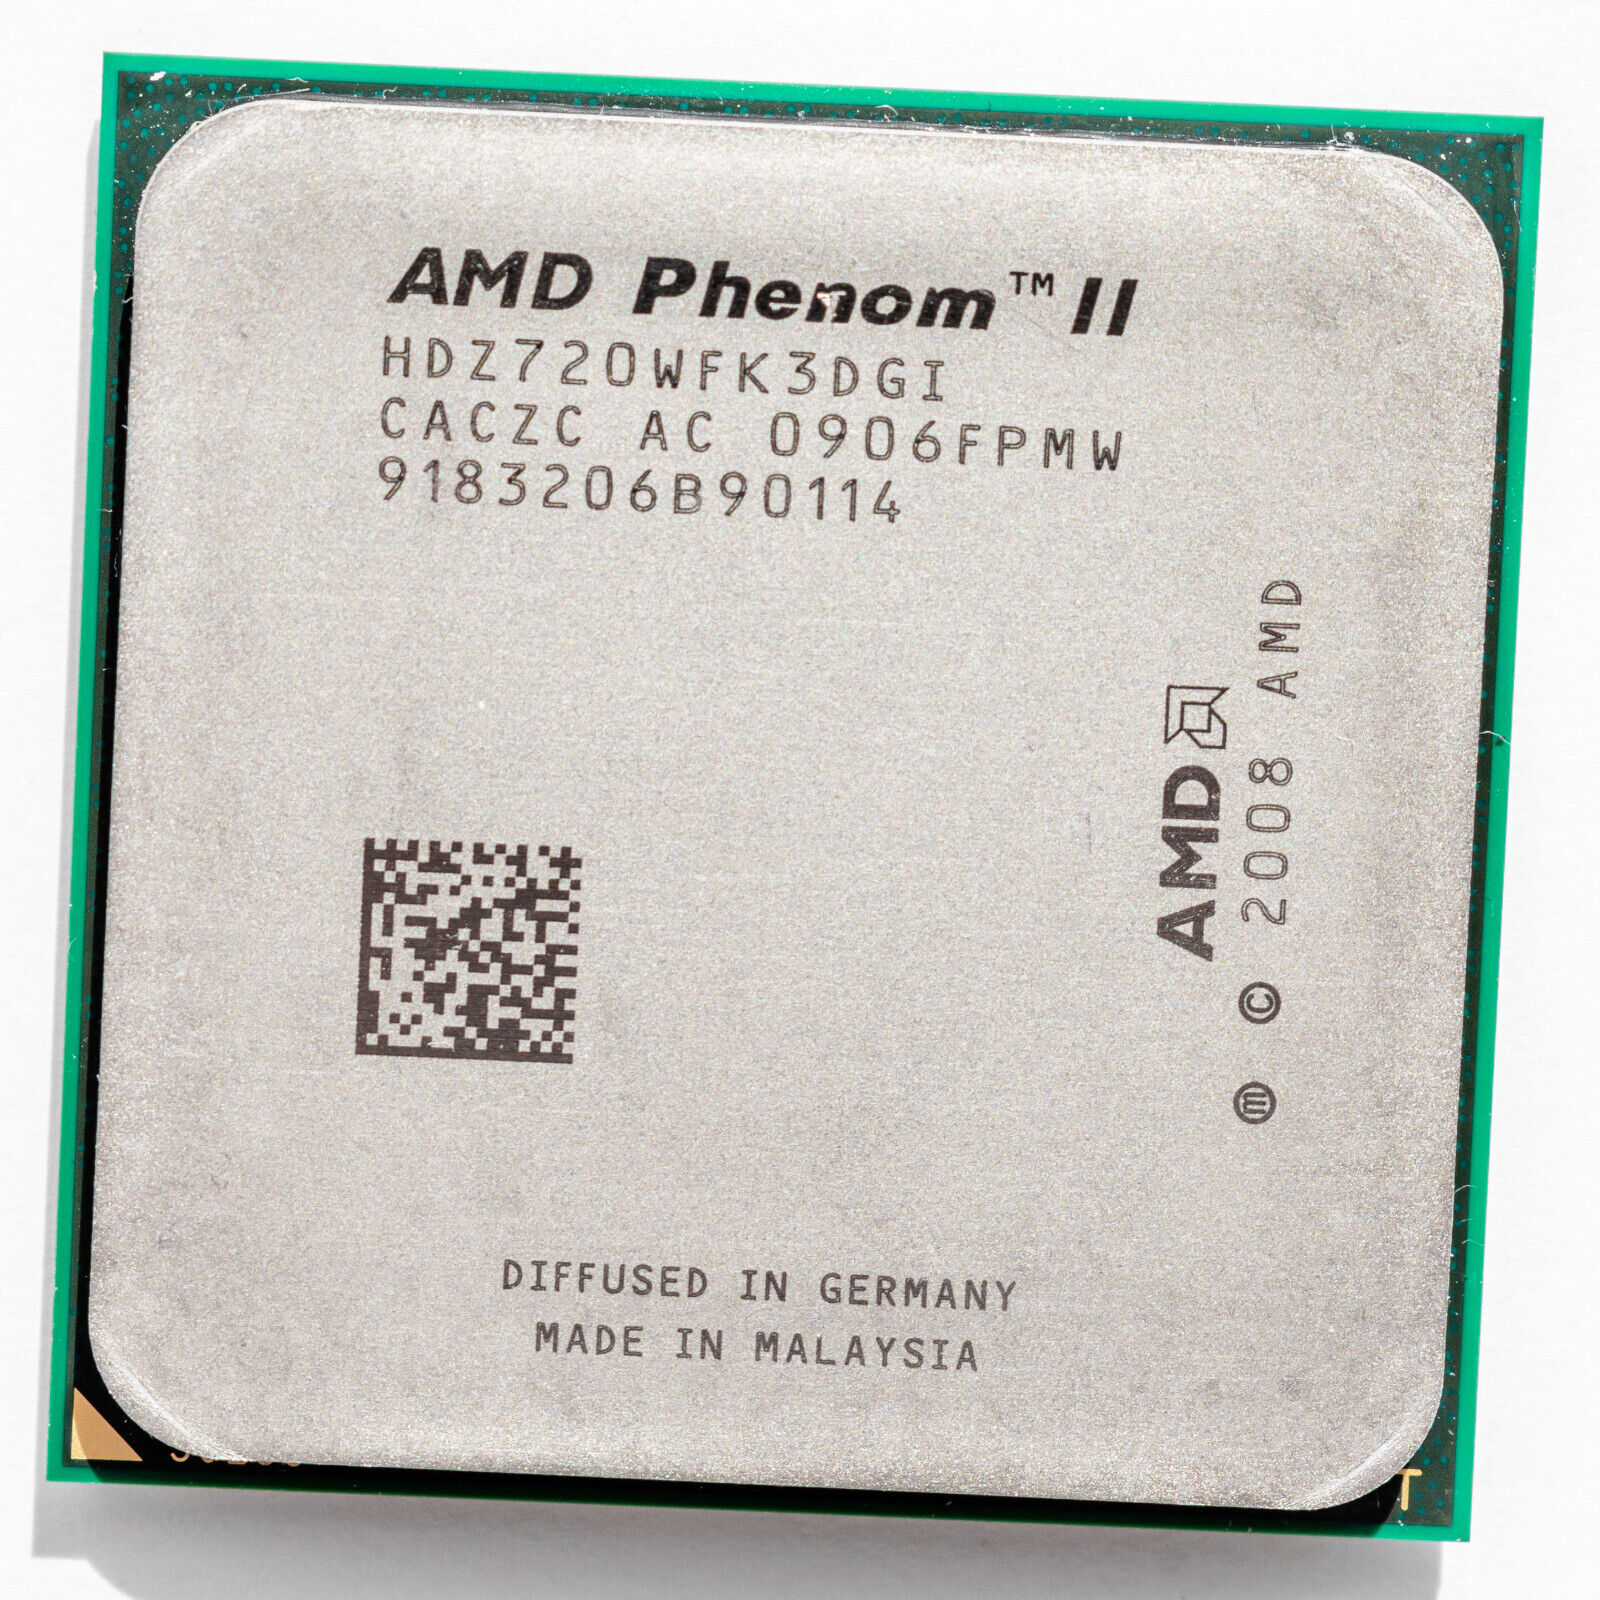 AMD Phenom II X3 720 Black Edition Triple Core AM3 Processor HDZ720WFK3DGI 95W